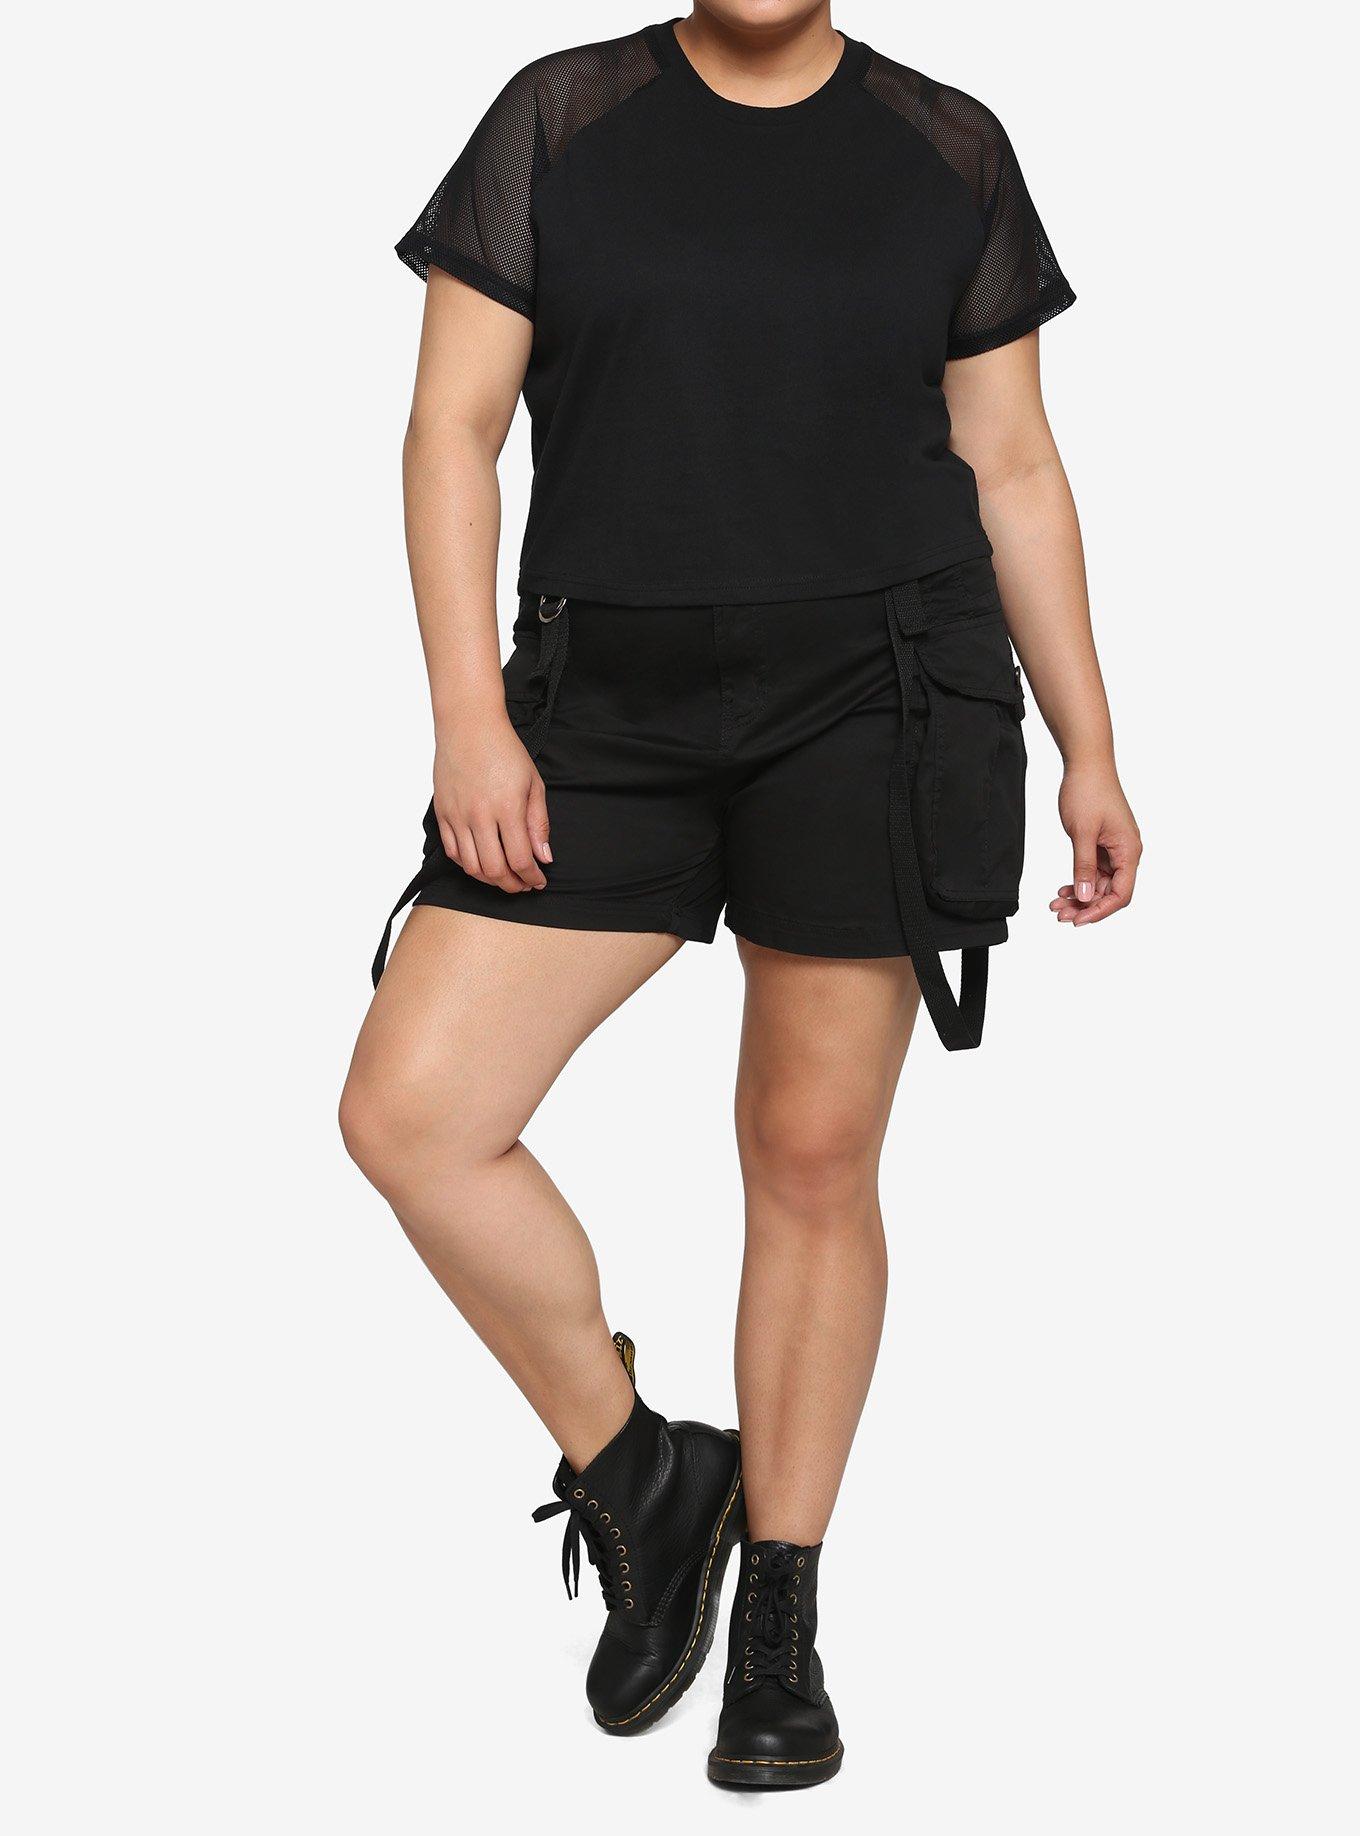 Black Mesh Sleeve Girls Raglan Top Plus Size, BLACK, alternate